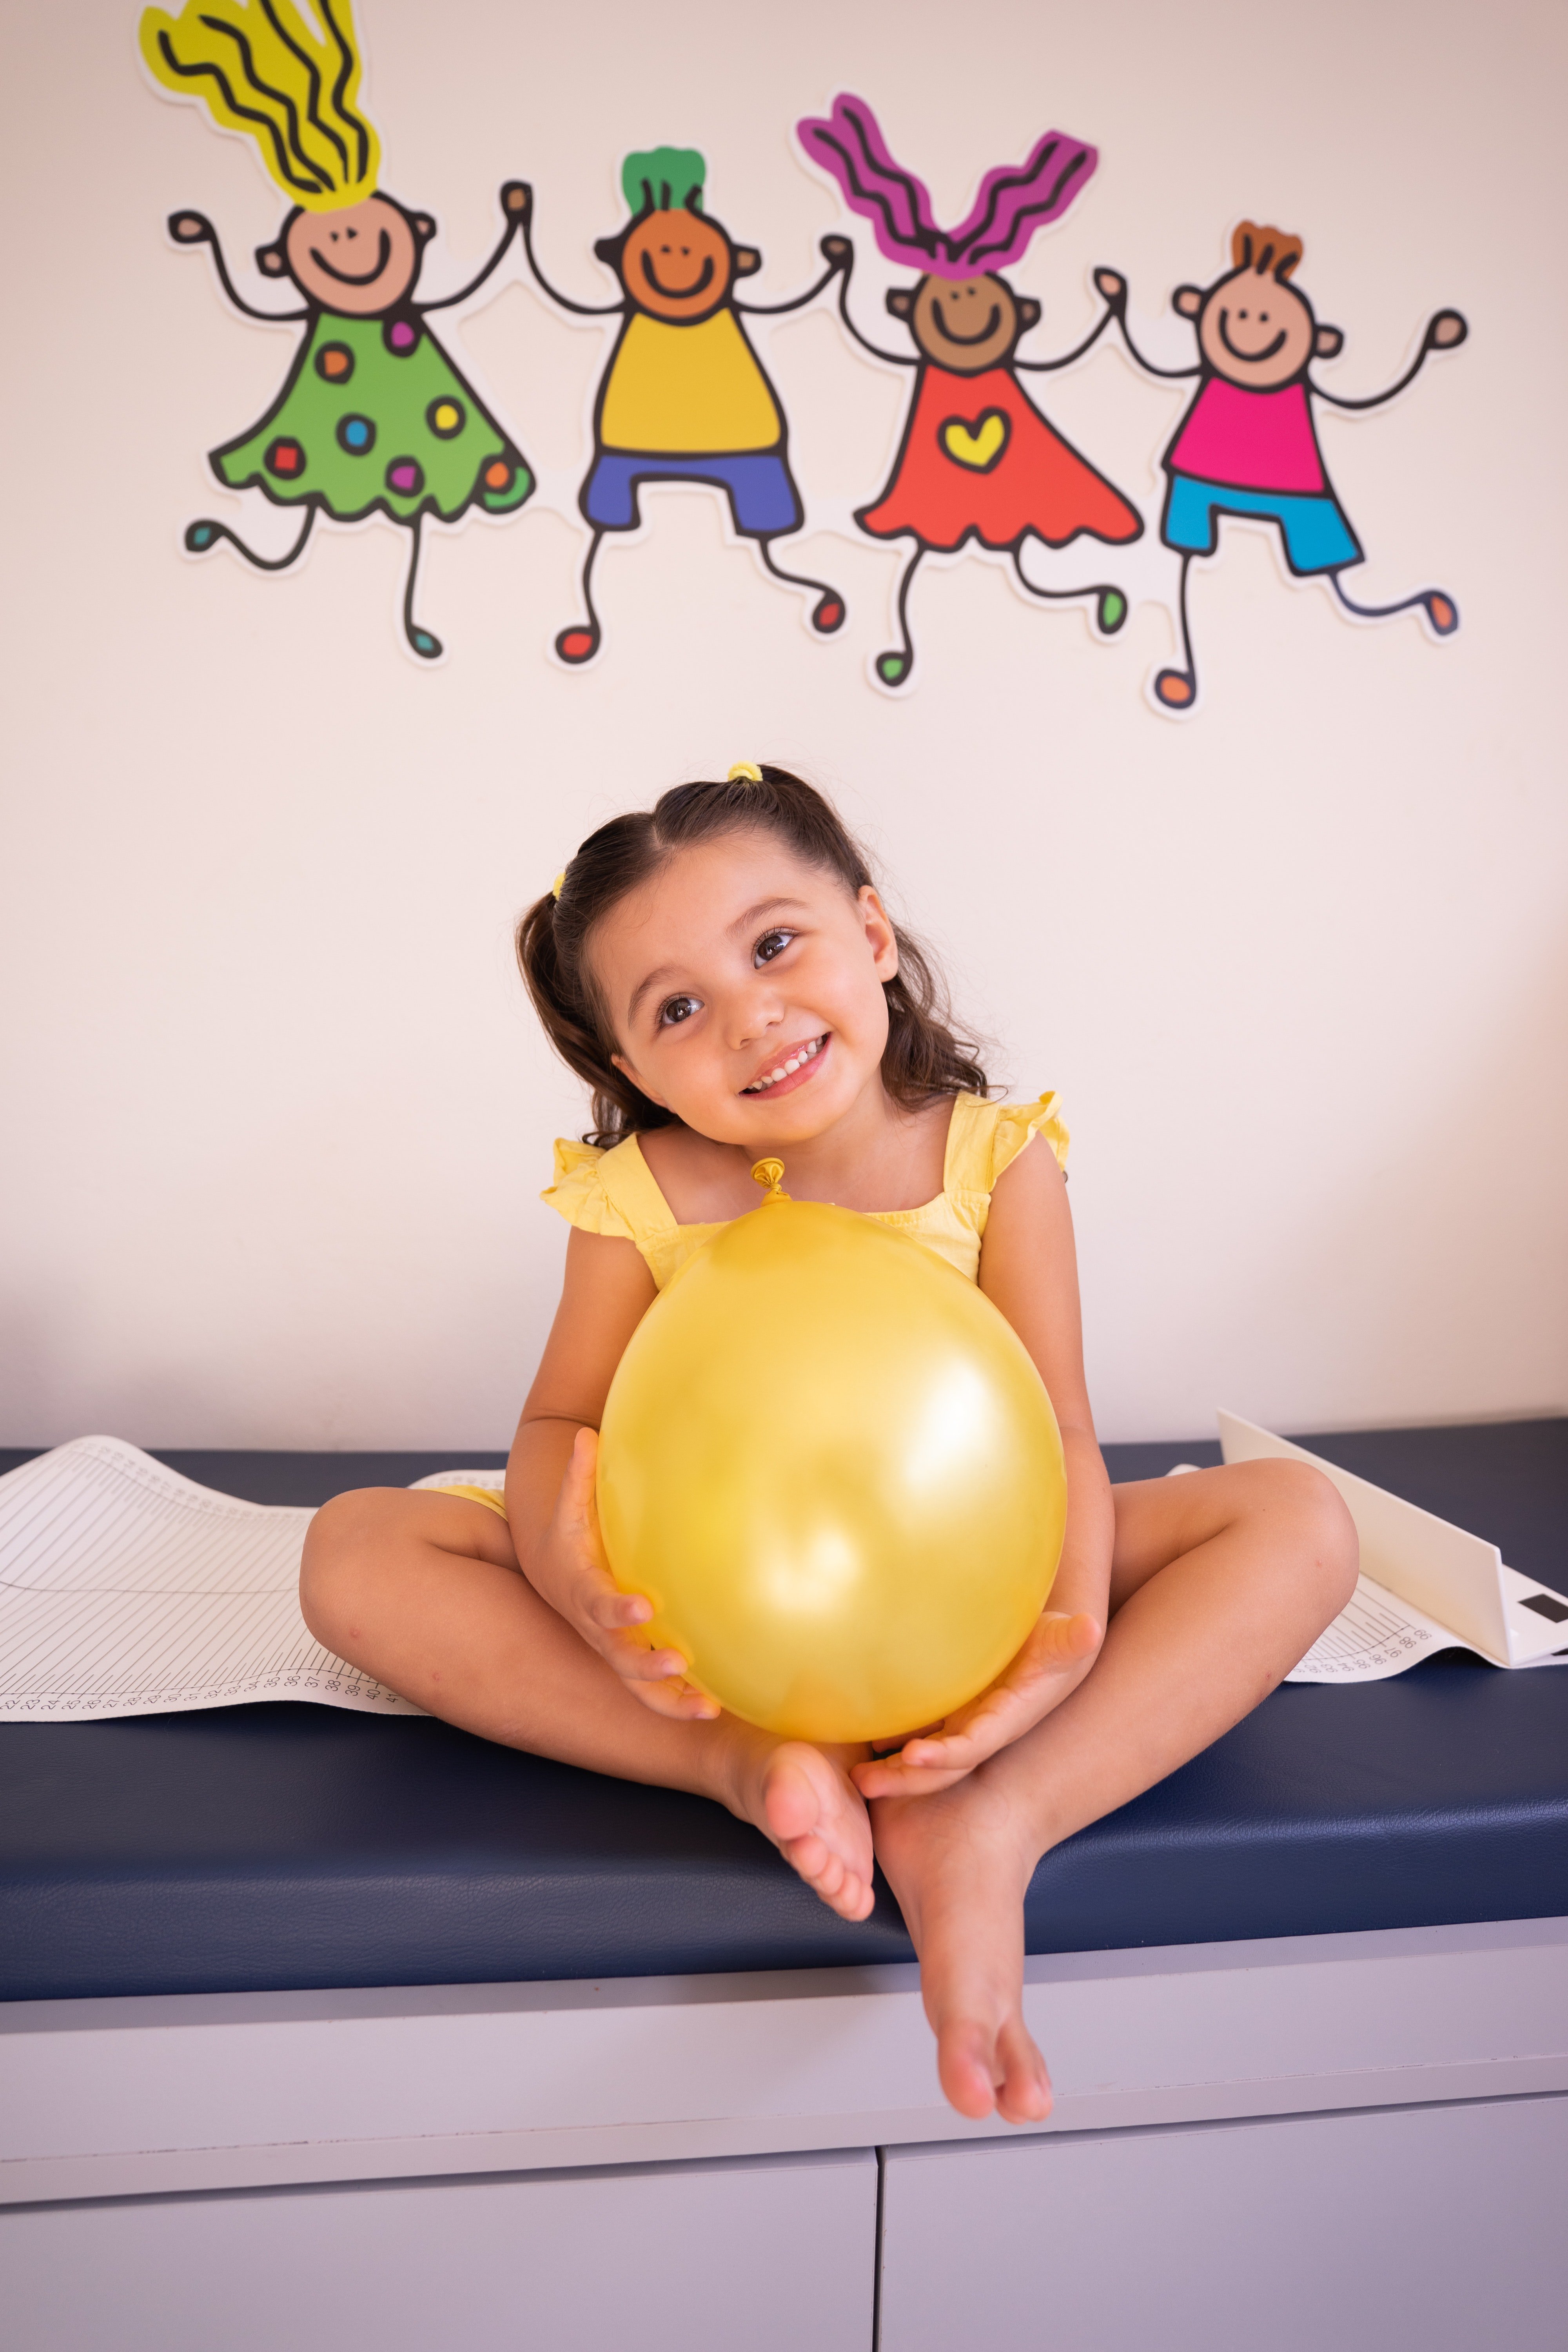 A happy girl holding a balloon